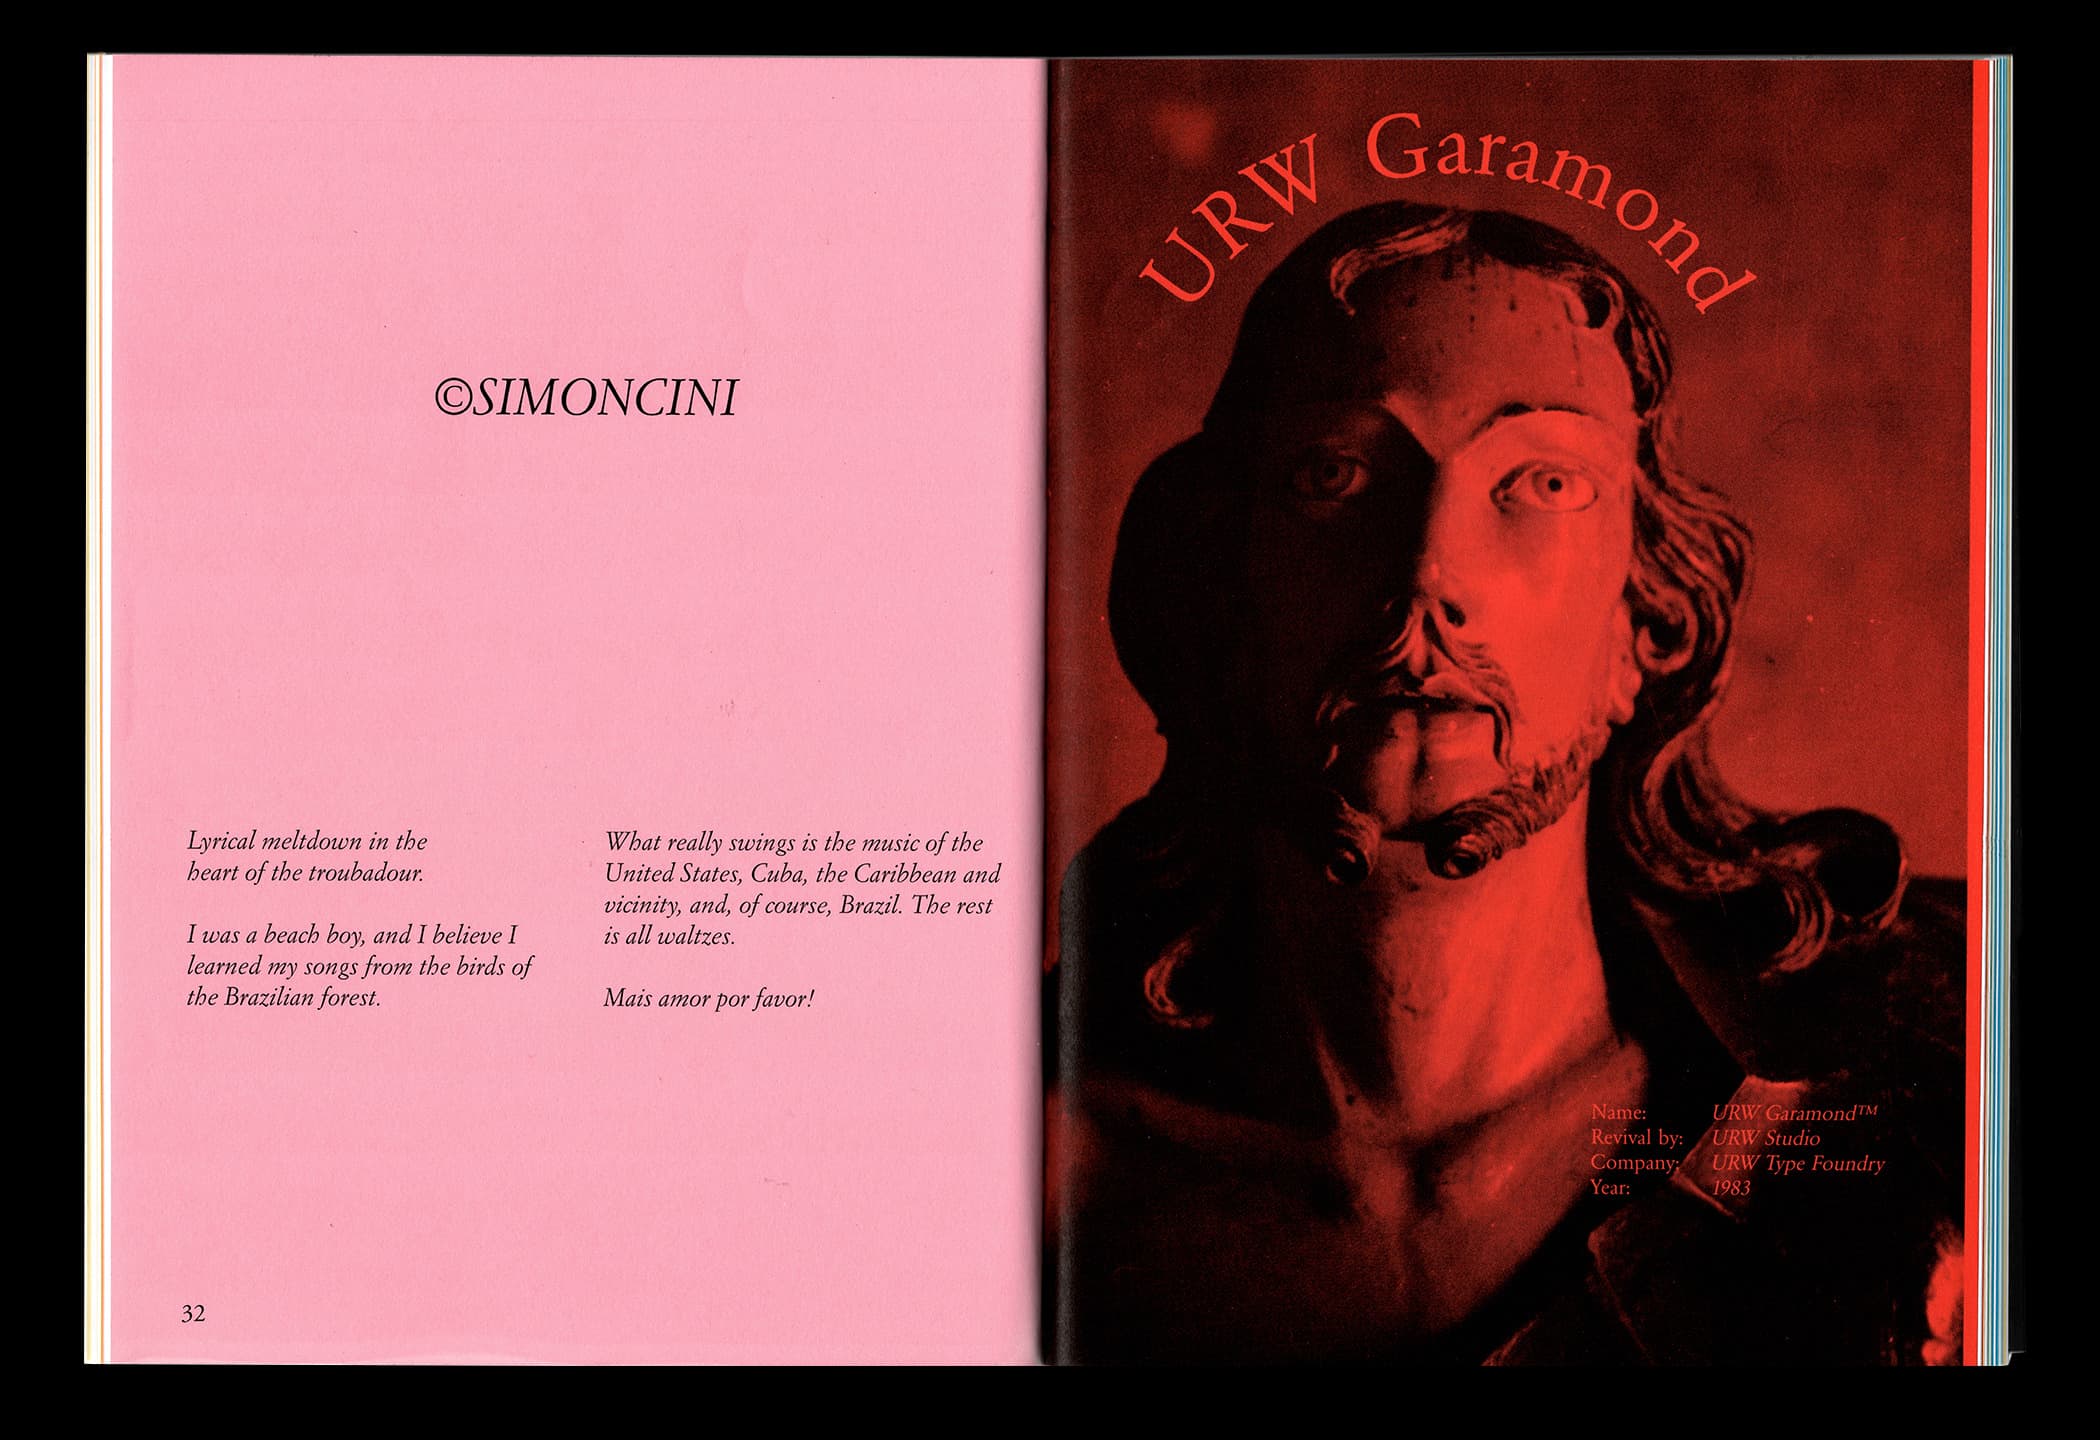 Image from GARAMONDs: Classics do not age by Nedislav G. Kamburov